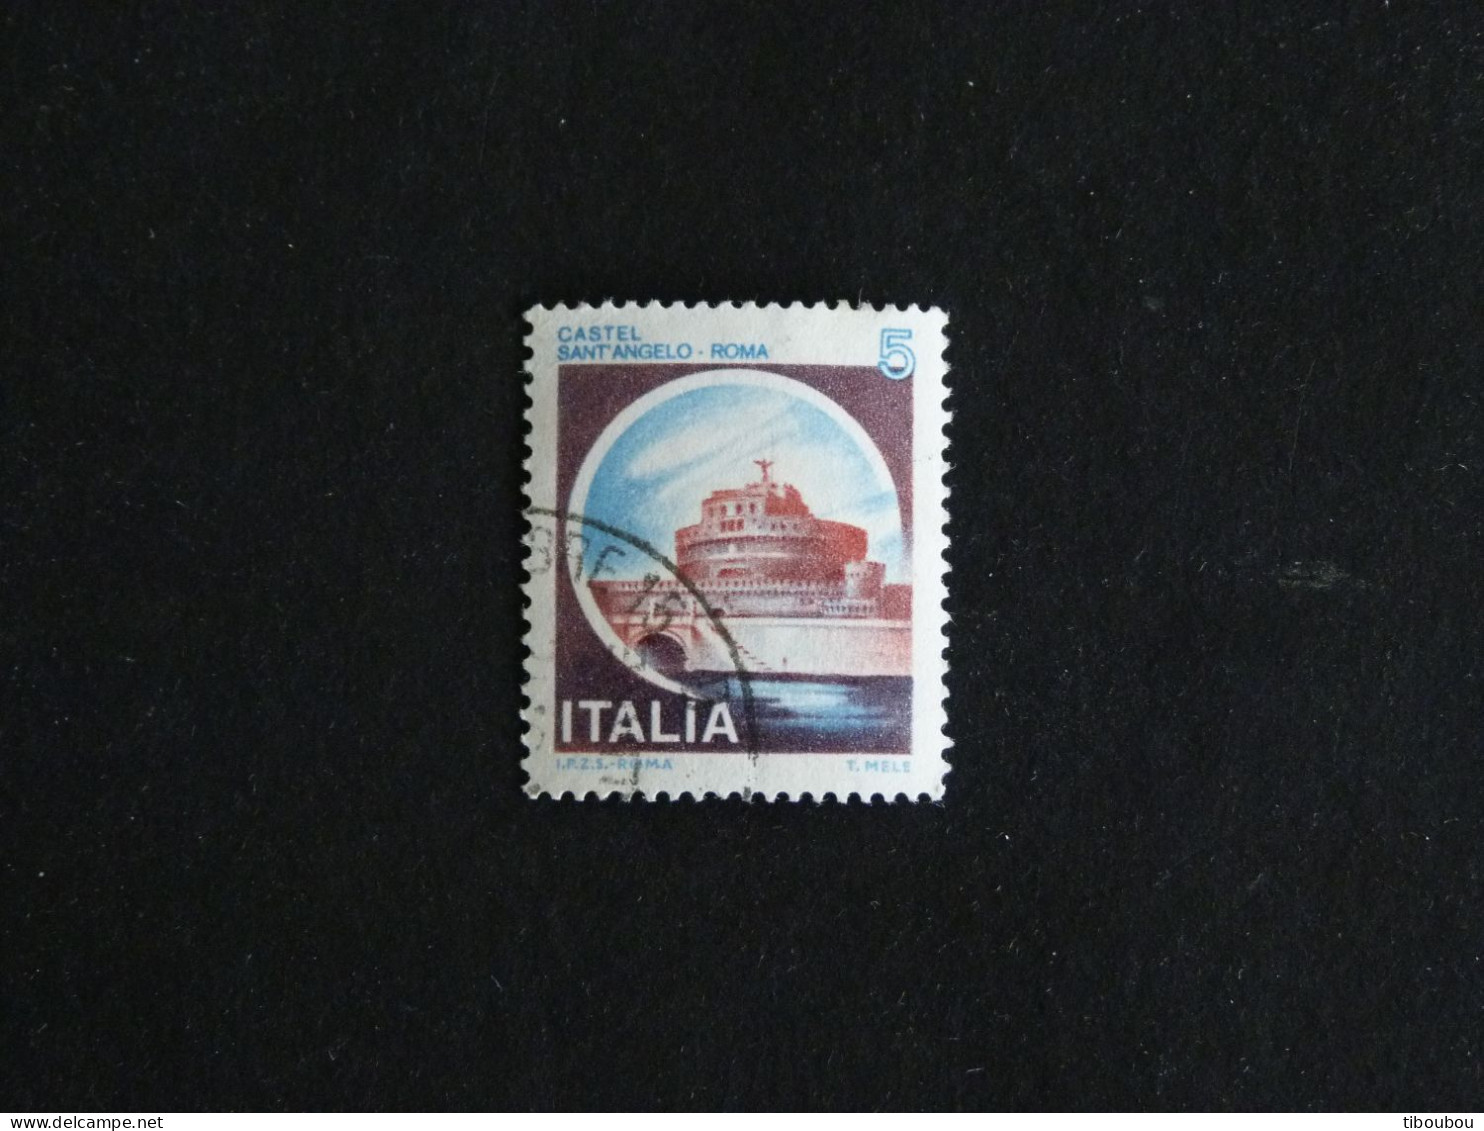 ITALIE ITALIA YT 1433 OBLITERE - CHATEAU SANT' ANGELO ROME - 1971-80: Used